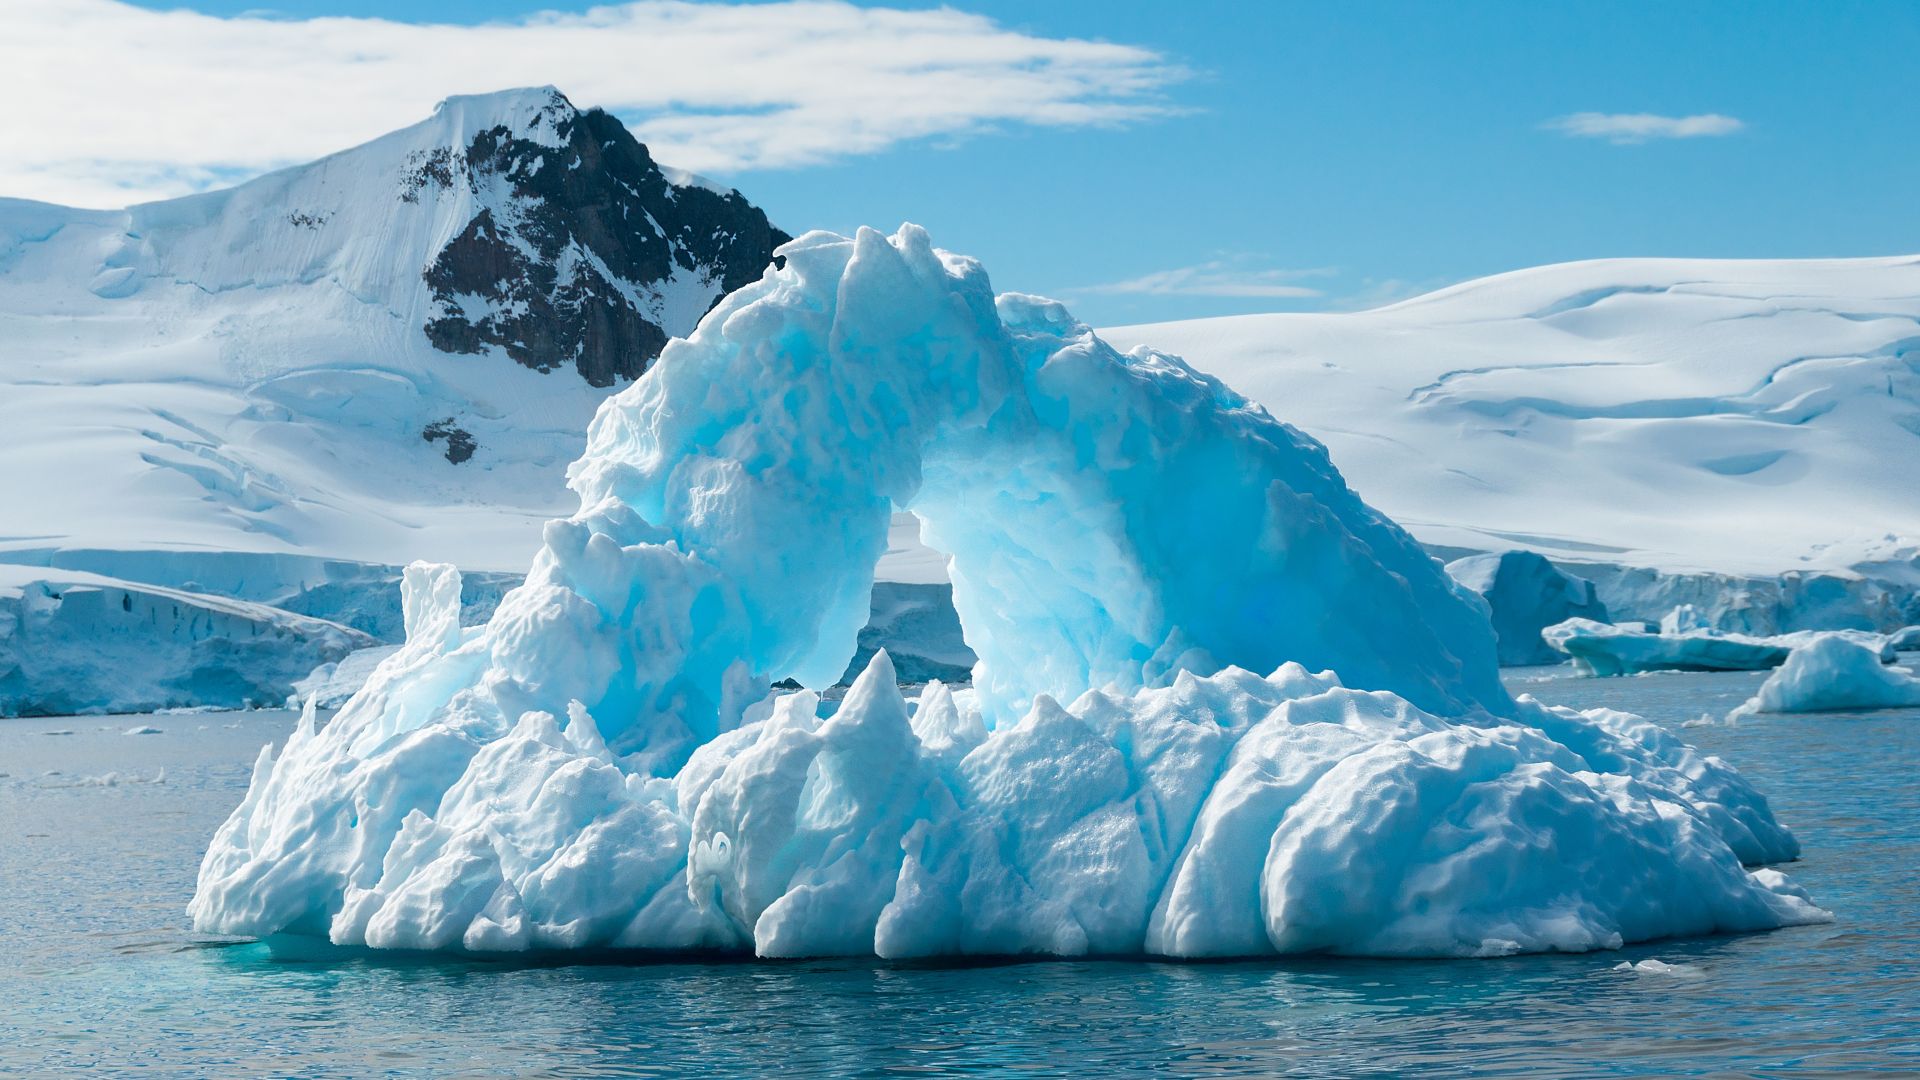 Антарктида, 5k, 4k, 8k, айсберг, на север, зима, Antarctica, 5k, 4k wallpaper, 8k, iceberg, north, winter (horizontal)